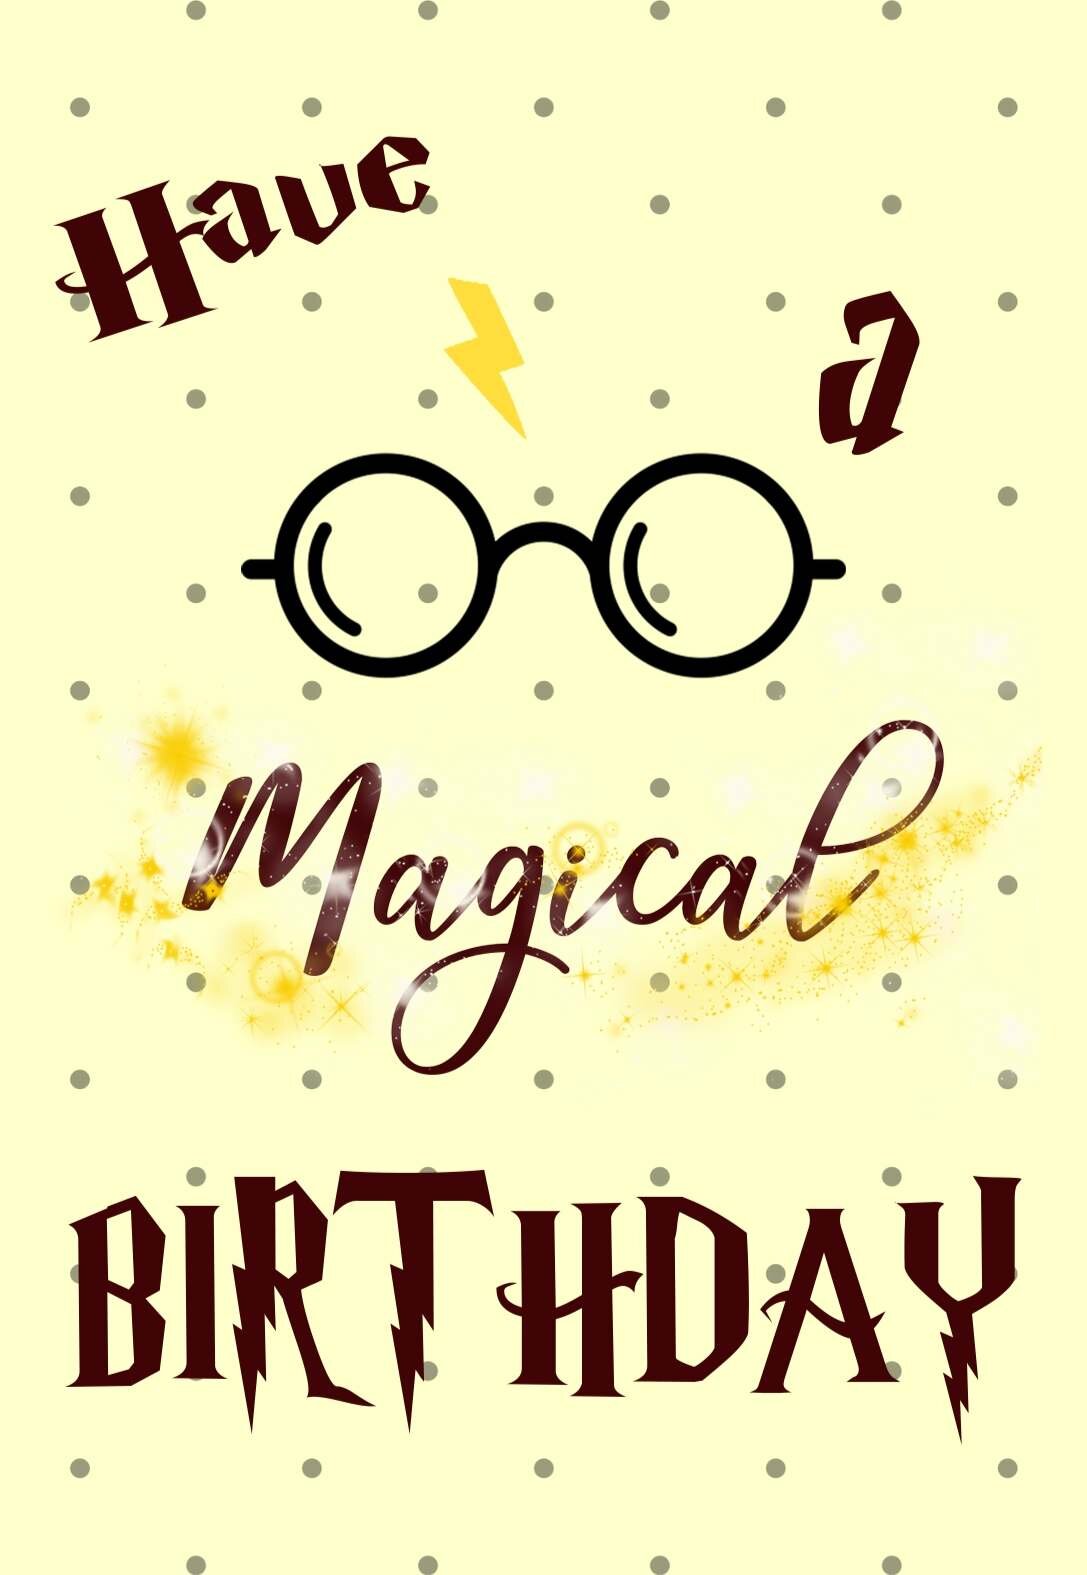 Happy Birthday Harry Potter Images | EdieChristiana